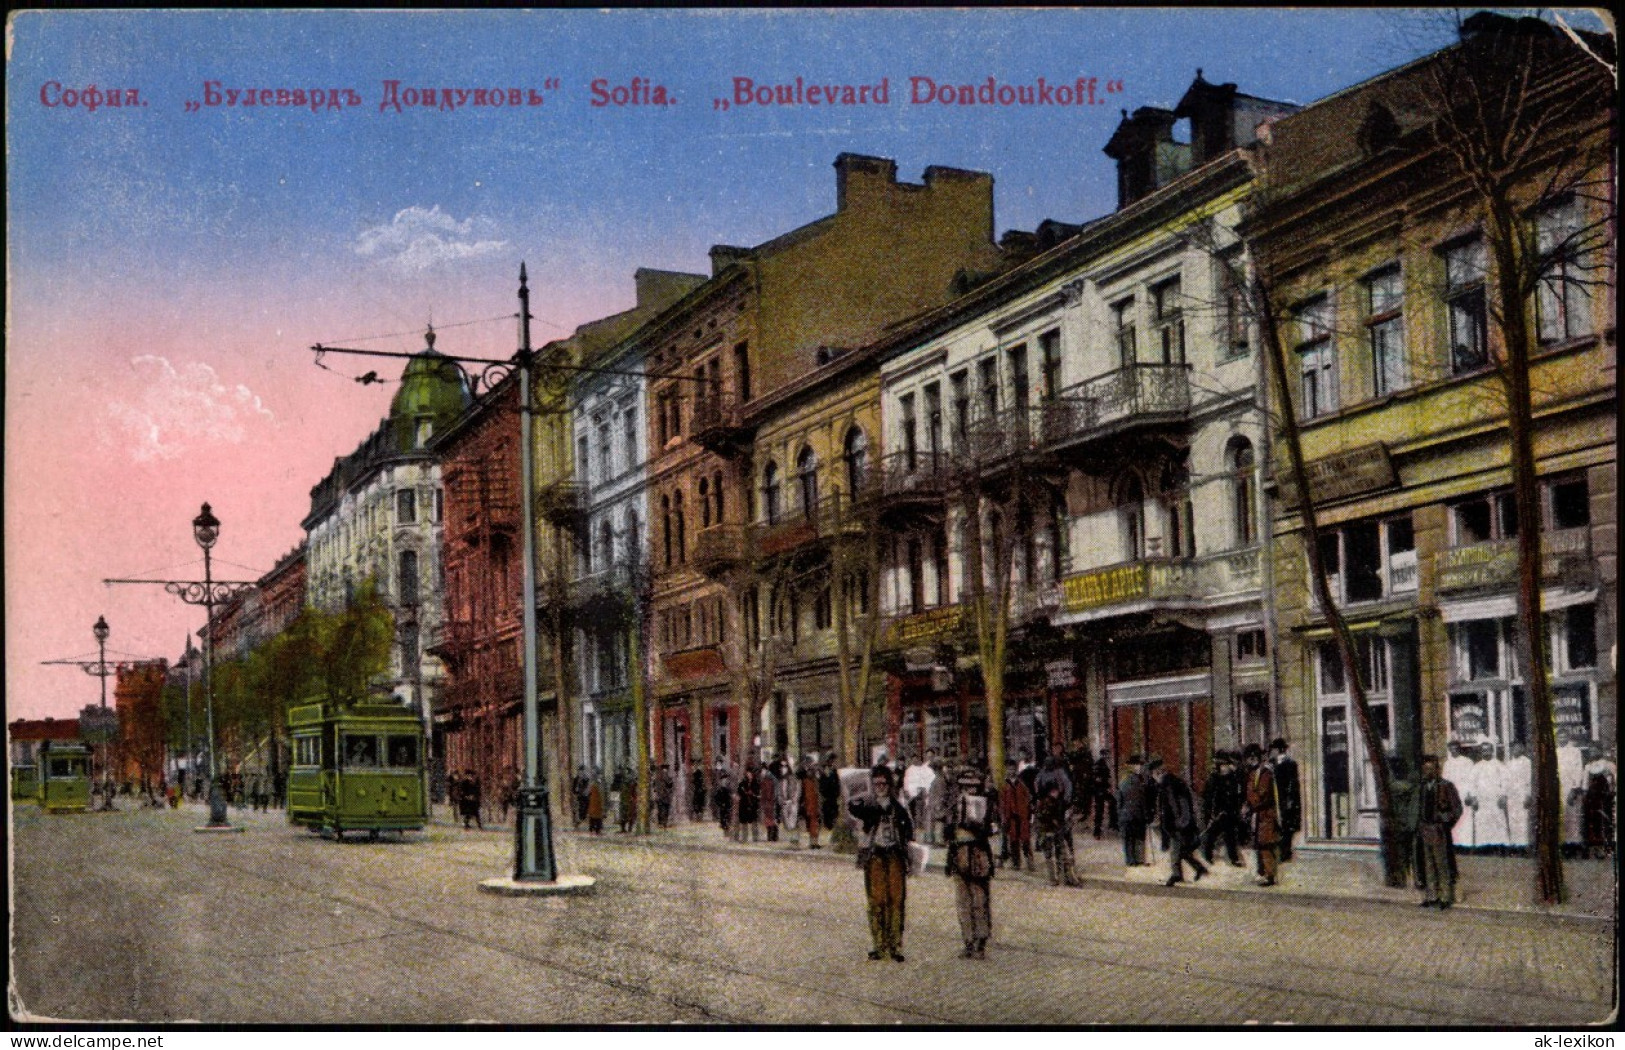 Sofia София ,,Булевардъ Дондуковь" Boulevard Dondoukoff" 1914 - Bulgaria